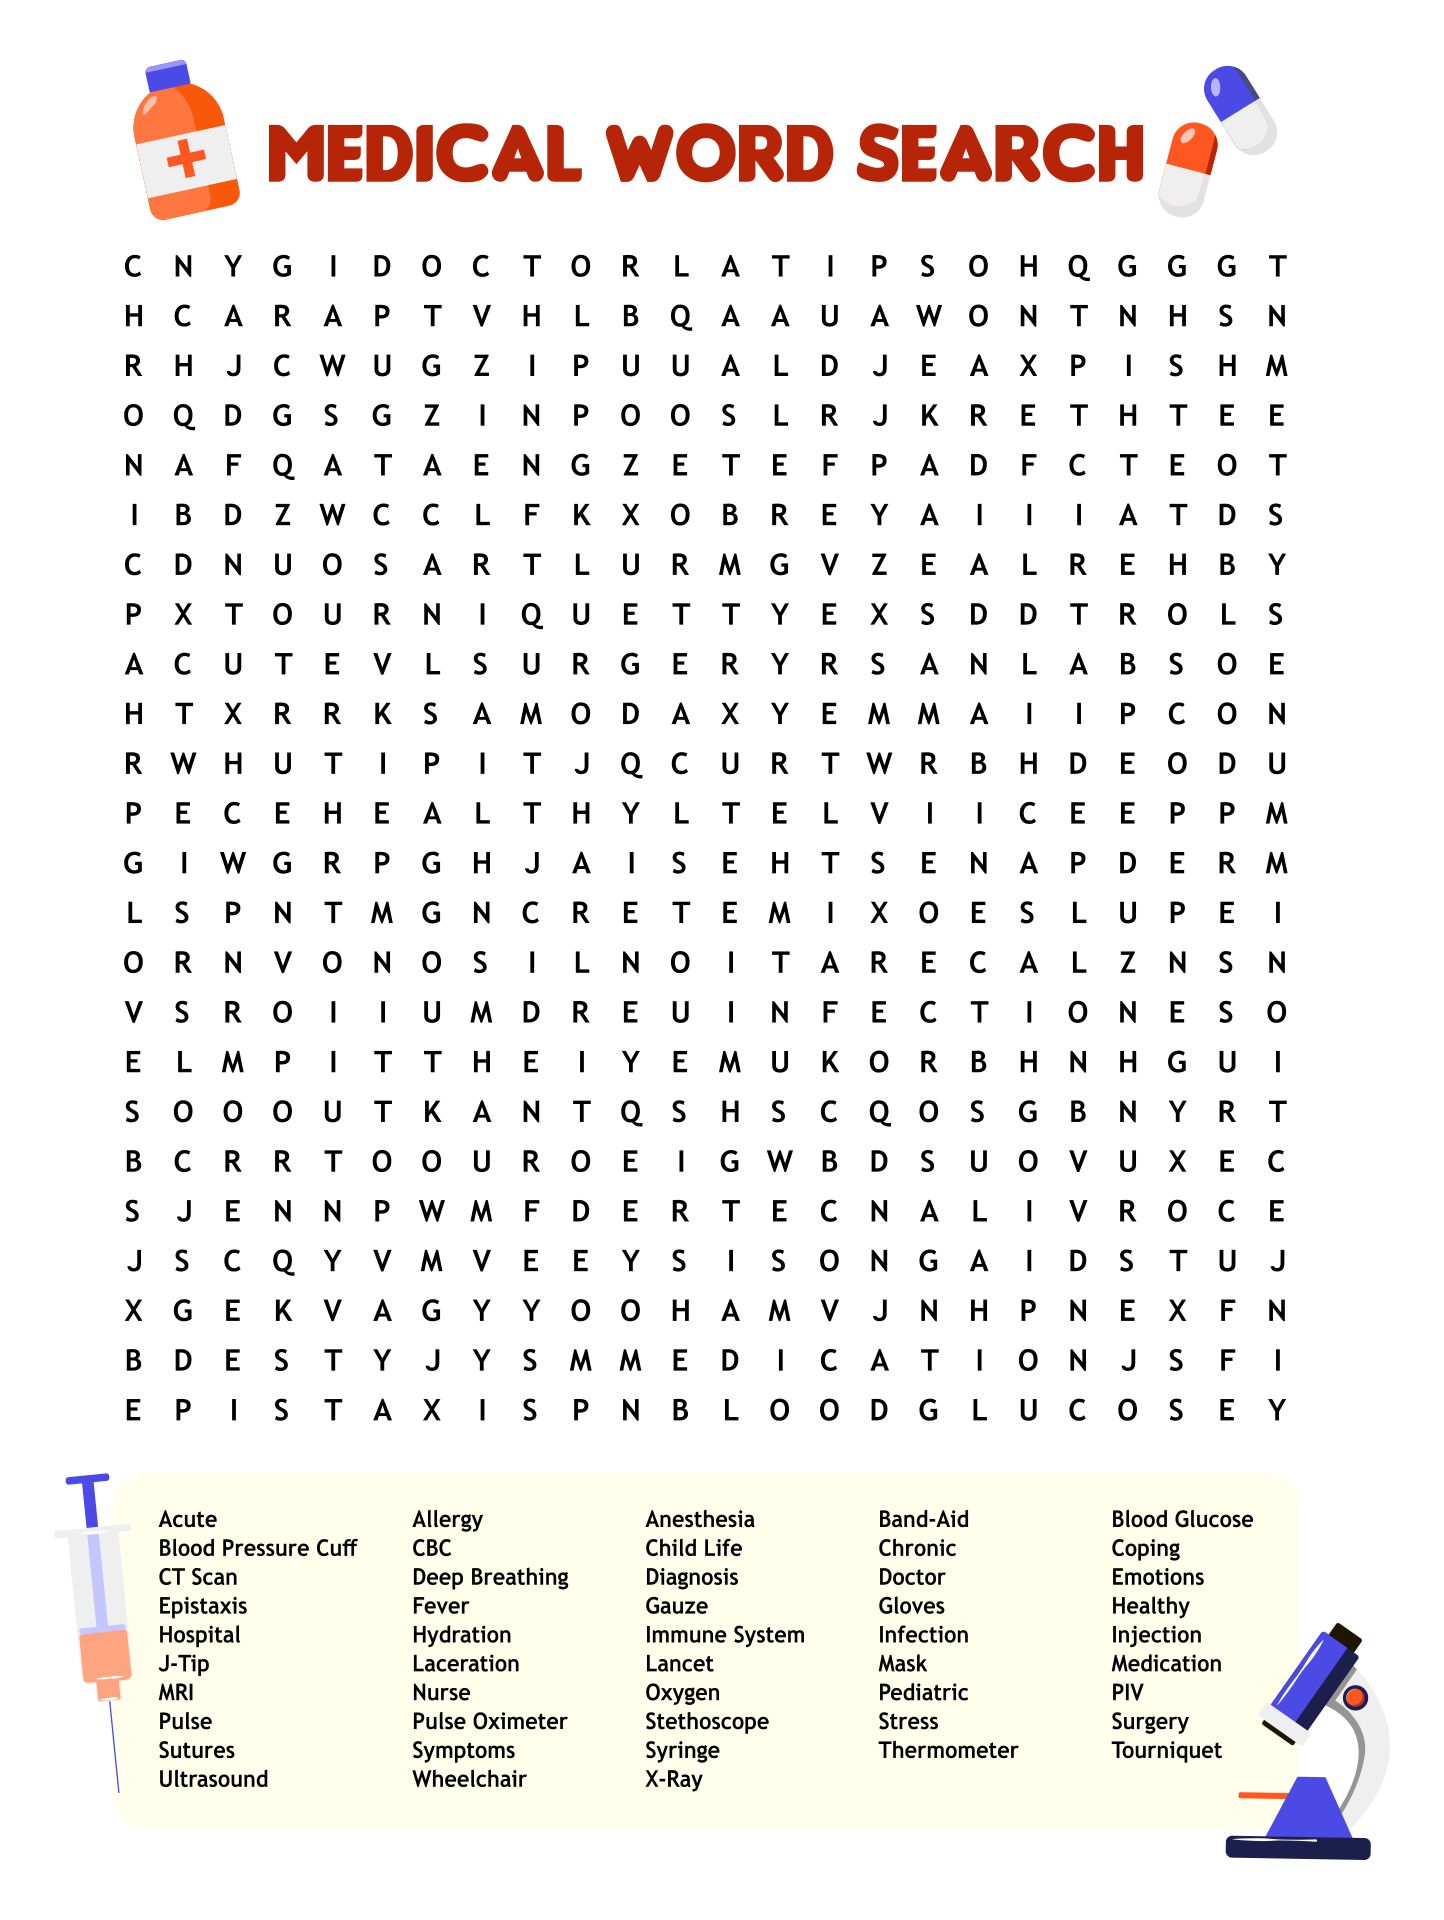 medical-crossword-puzzles